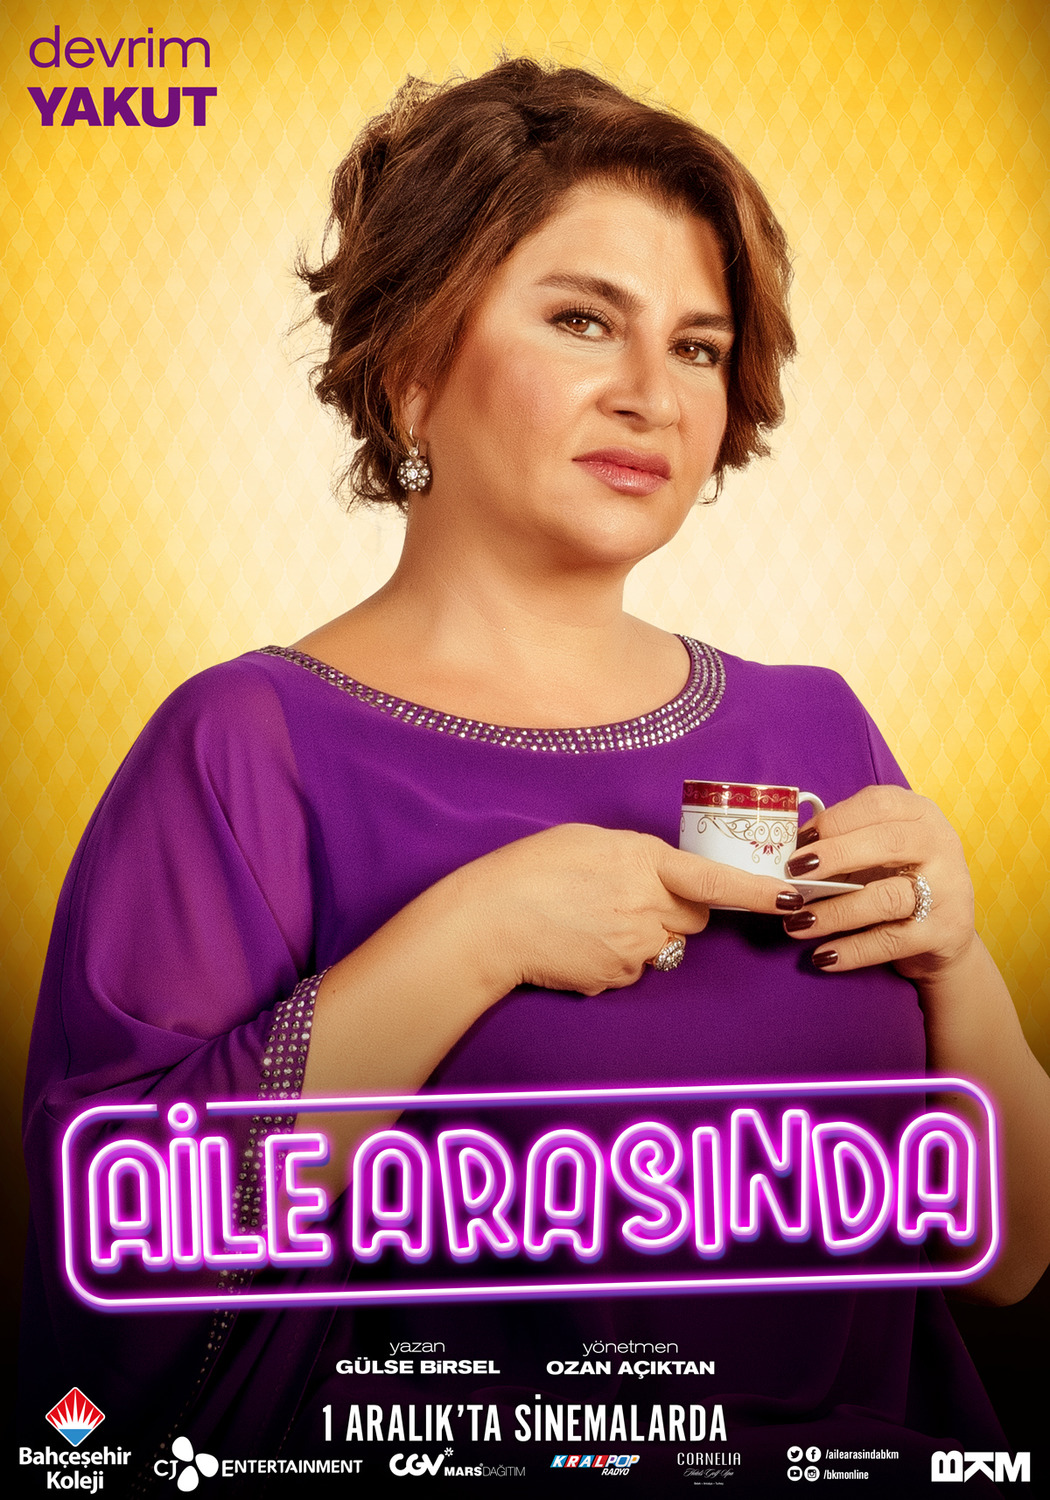 Extra Large Movie Poster Image for Aile Arasinda (#7 of 13)